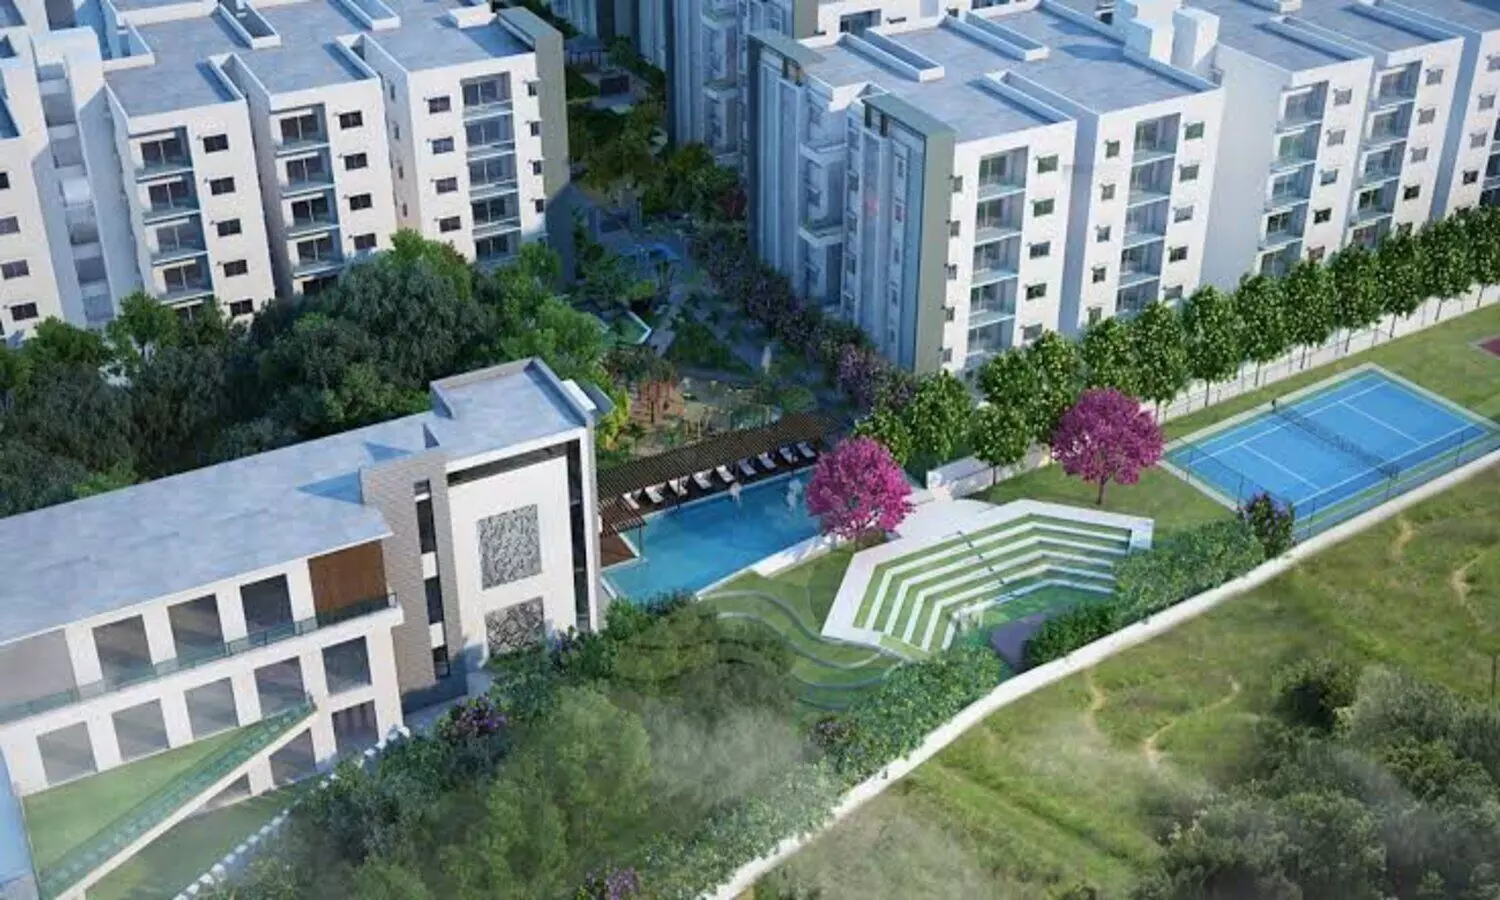 Gruha Jyothi scheme: Luxury apartment dwellers receive zero bills, Congress to face heat